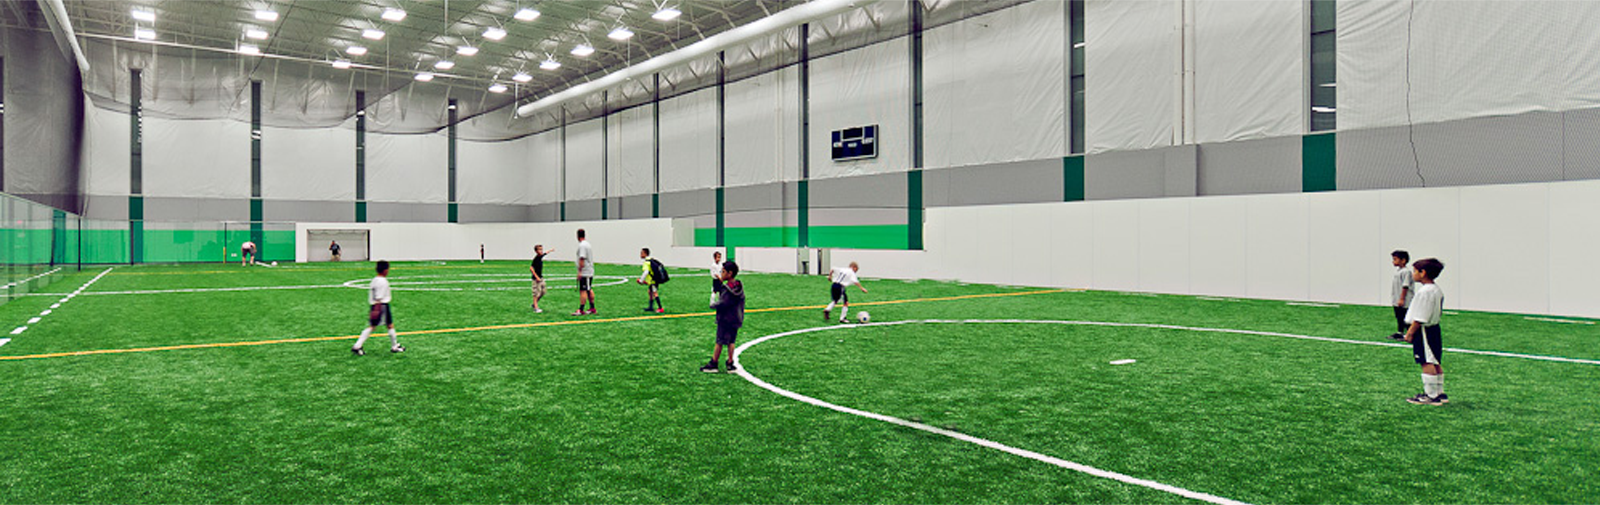 american indoor soccer center